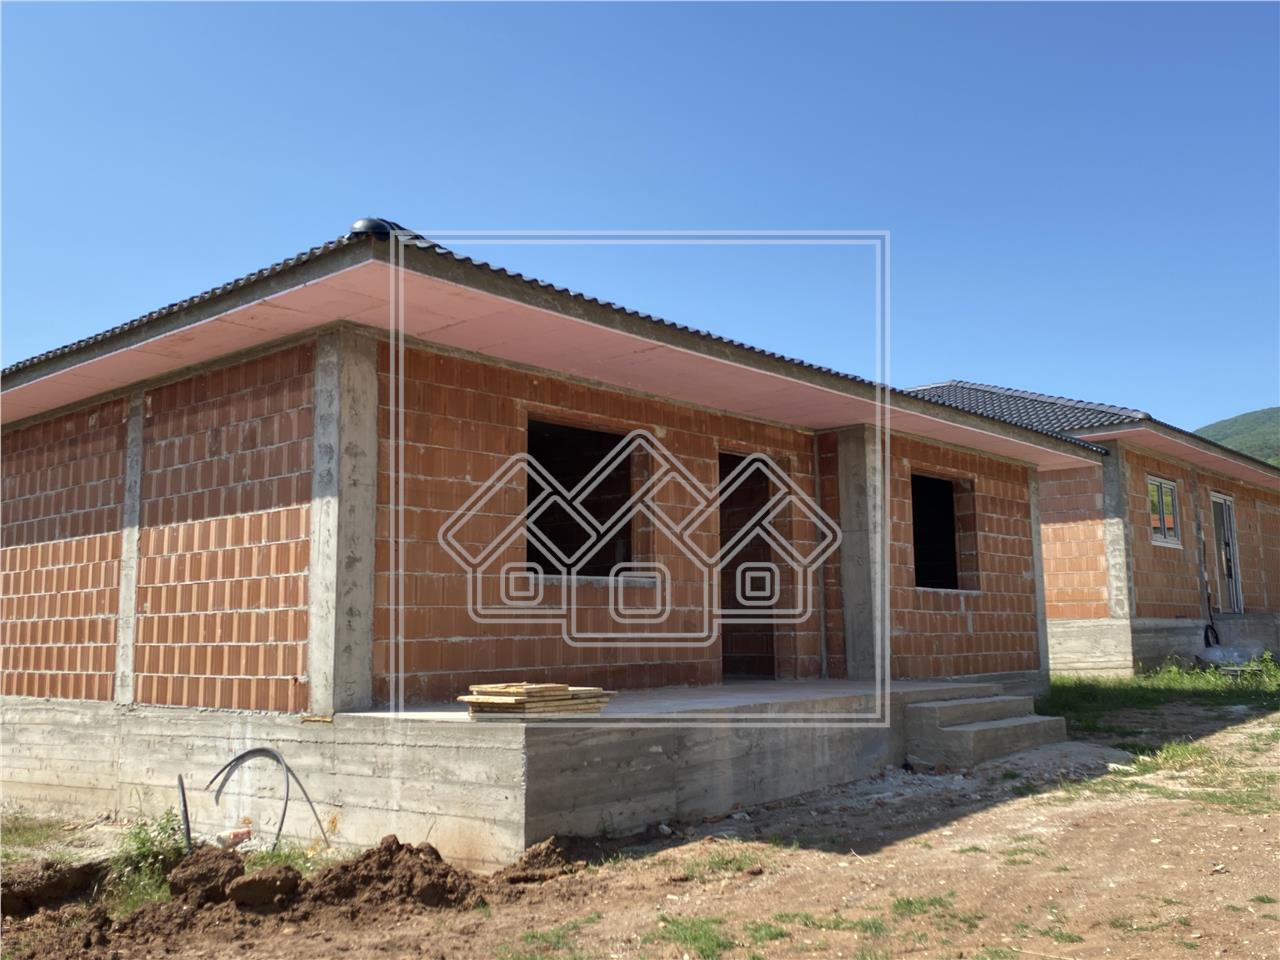 House for sale in Alba Iulia - new building - 2 bedrooms -Micesti area